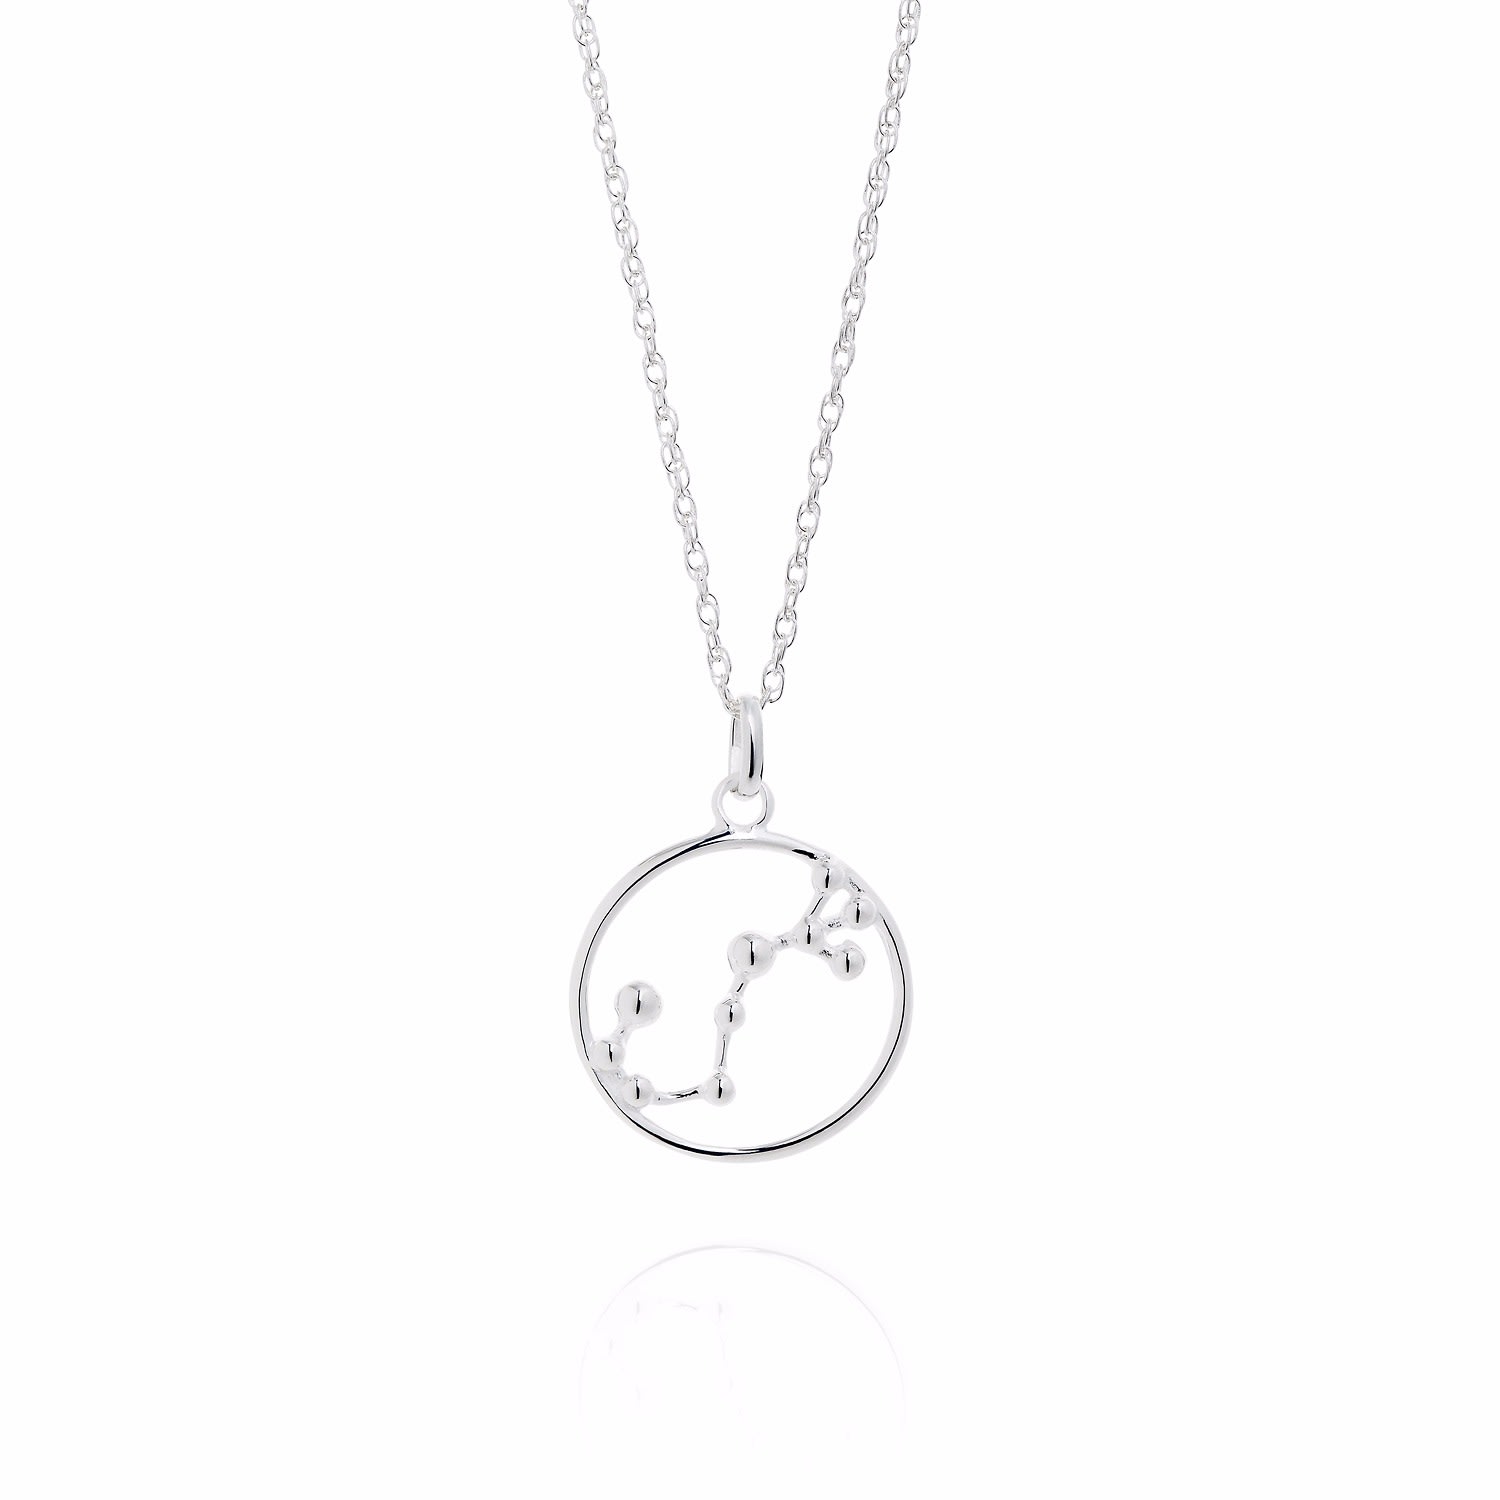 Women’s Silver Scorpio Astrology Necklace Yasmin Everley Jewellery